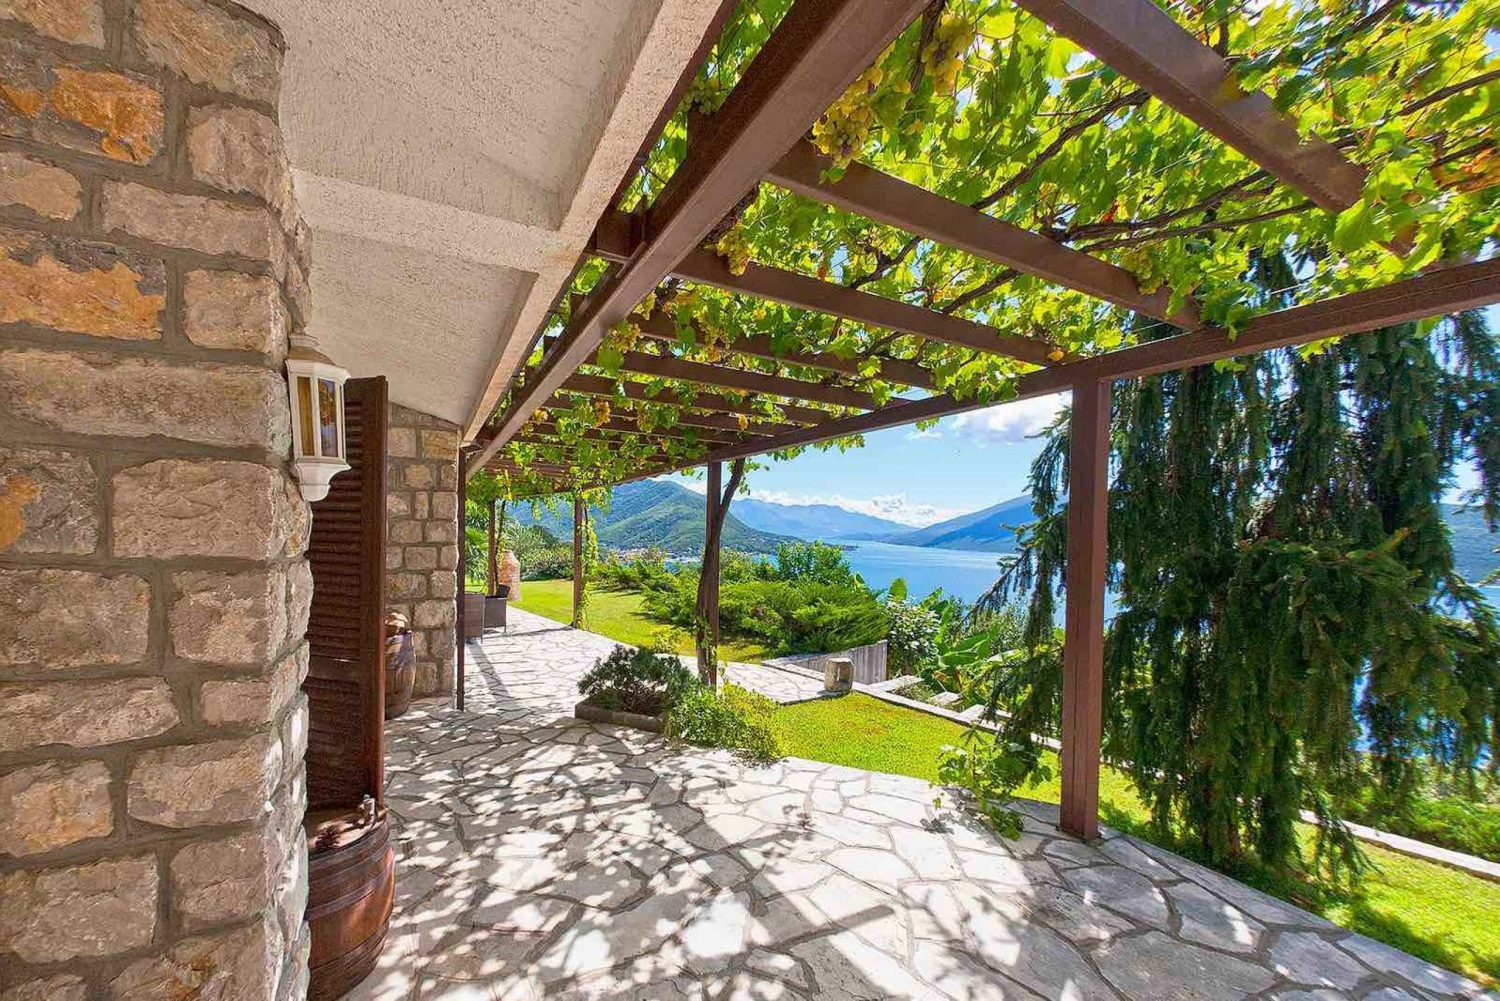 Kotor: Herceg Novi, Savina Monastery and Wine Tasting Tour